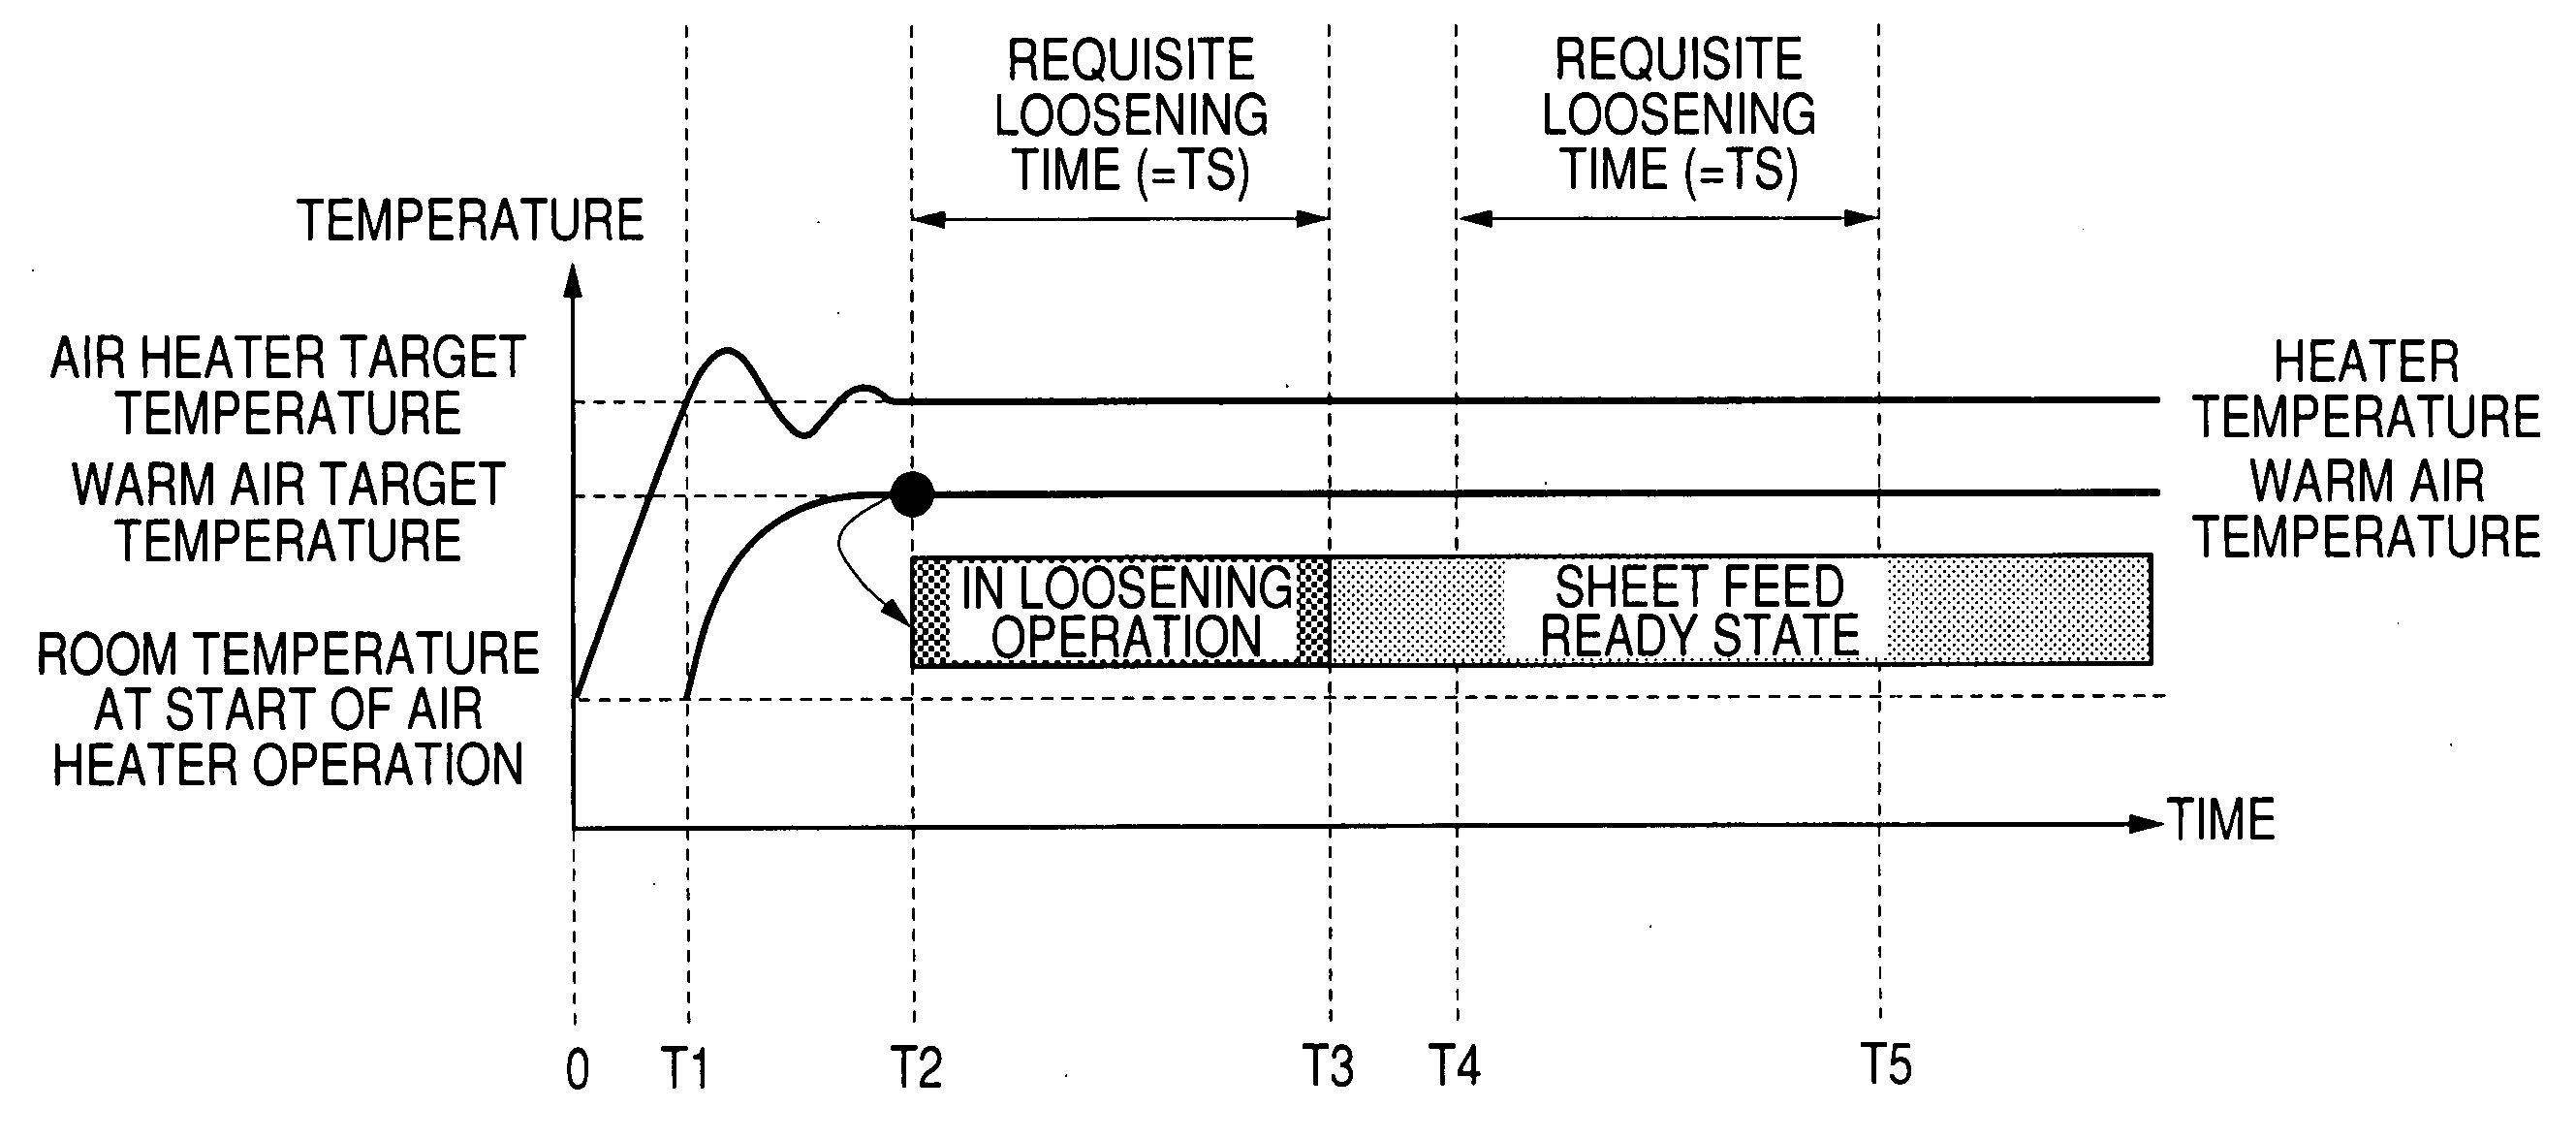 Sheet feeding apparatus